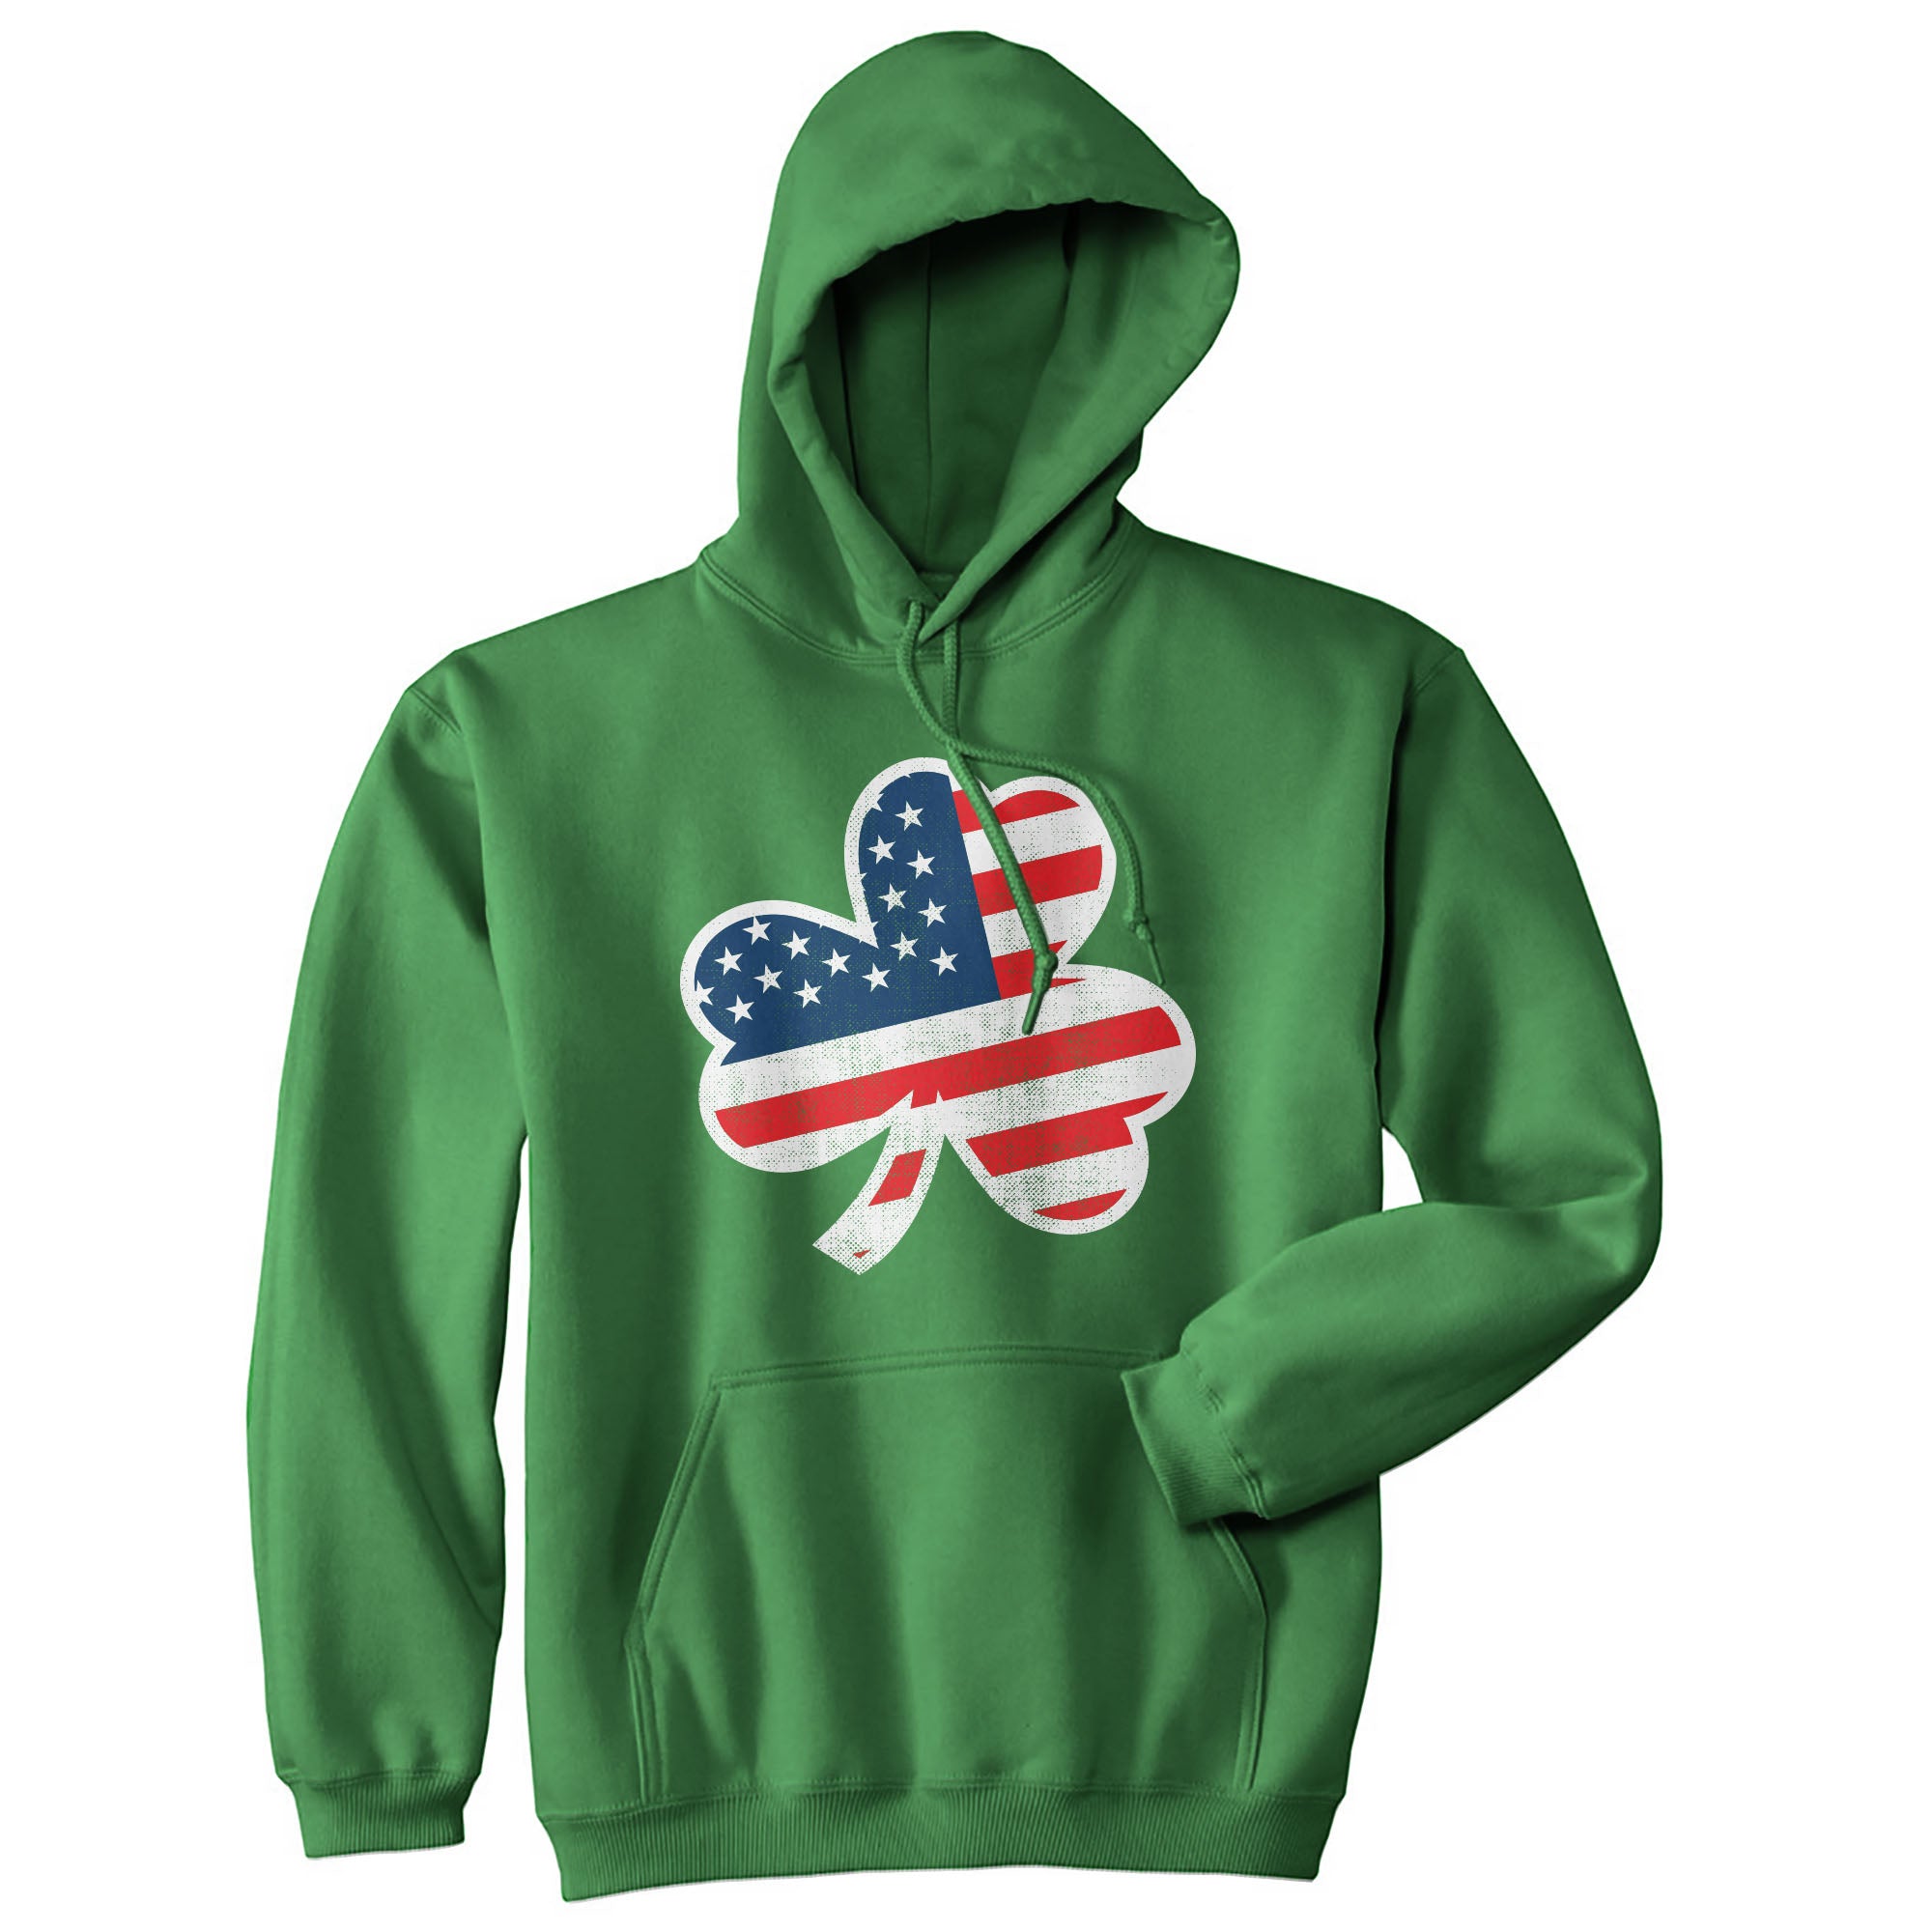 Funny Green - Shamrock Flag American Flag Shamrock Hoodie Nerdy Saint Patrick's Day Sarcastic Tee